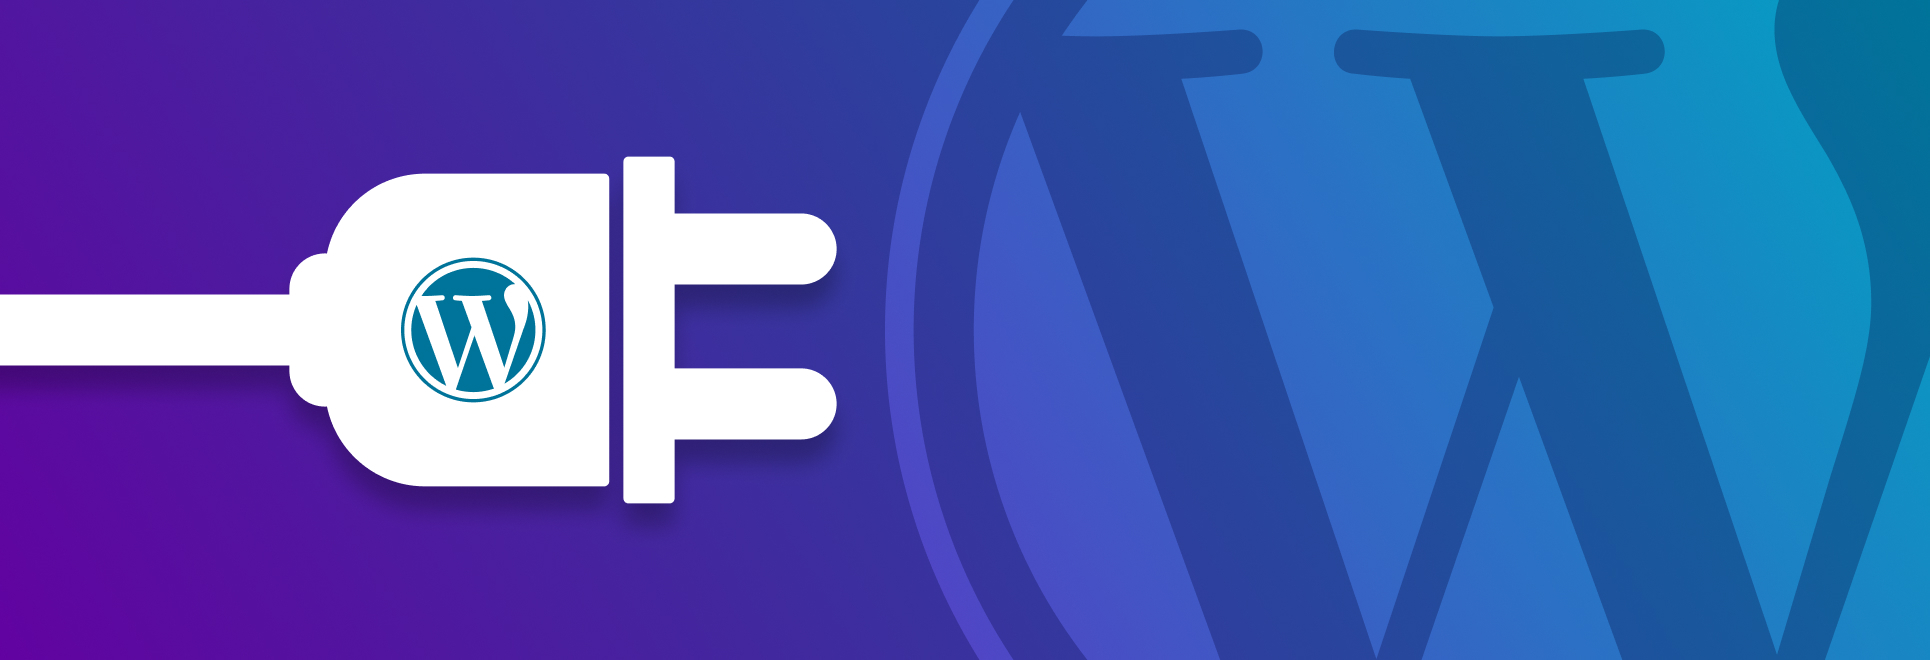 WordPress Web Design Plugins | Integrity XD